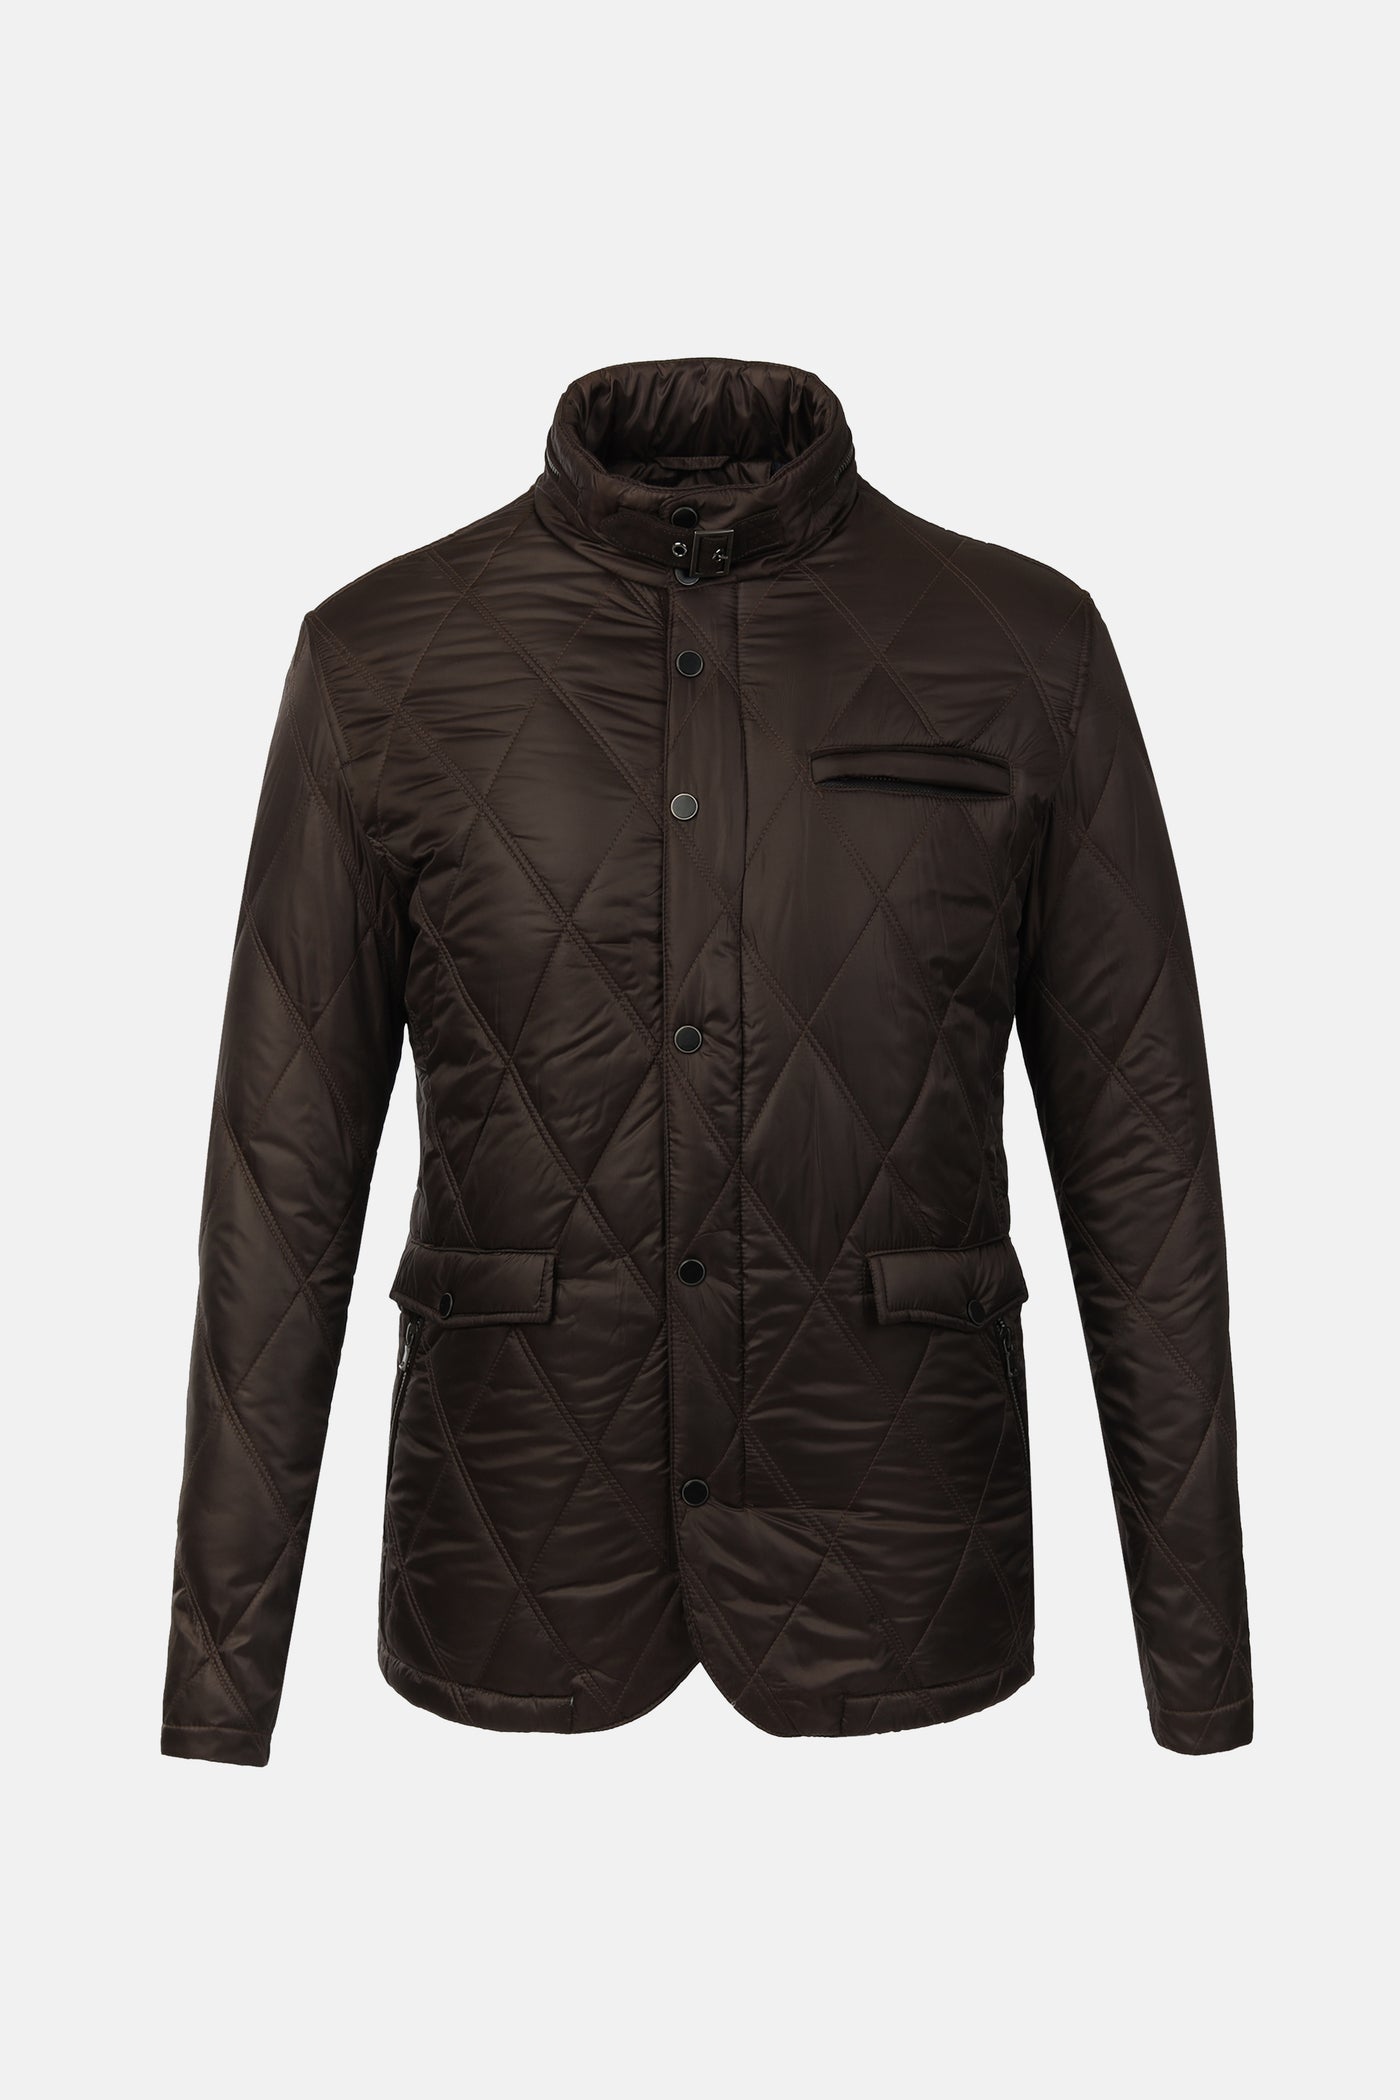 Diamond Shape Waterproof Dark Brown Sweater Jacket